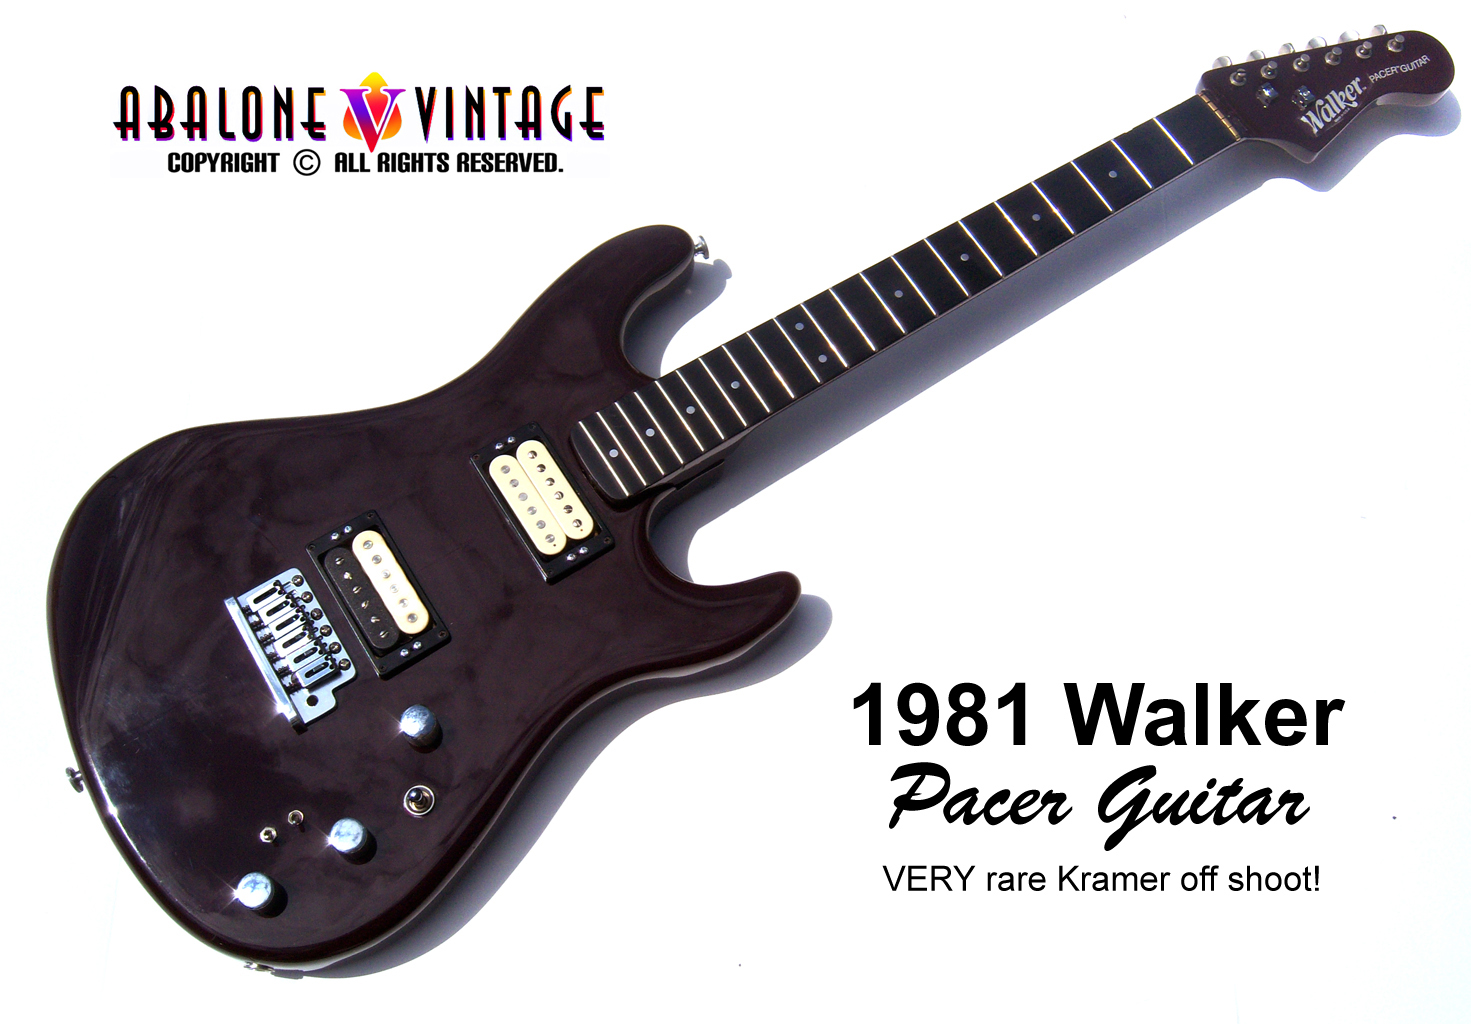 1981 Walker Pacer Guitar. Kramer prototype